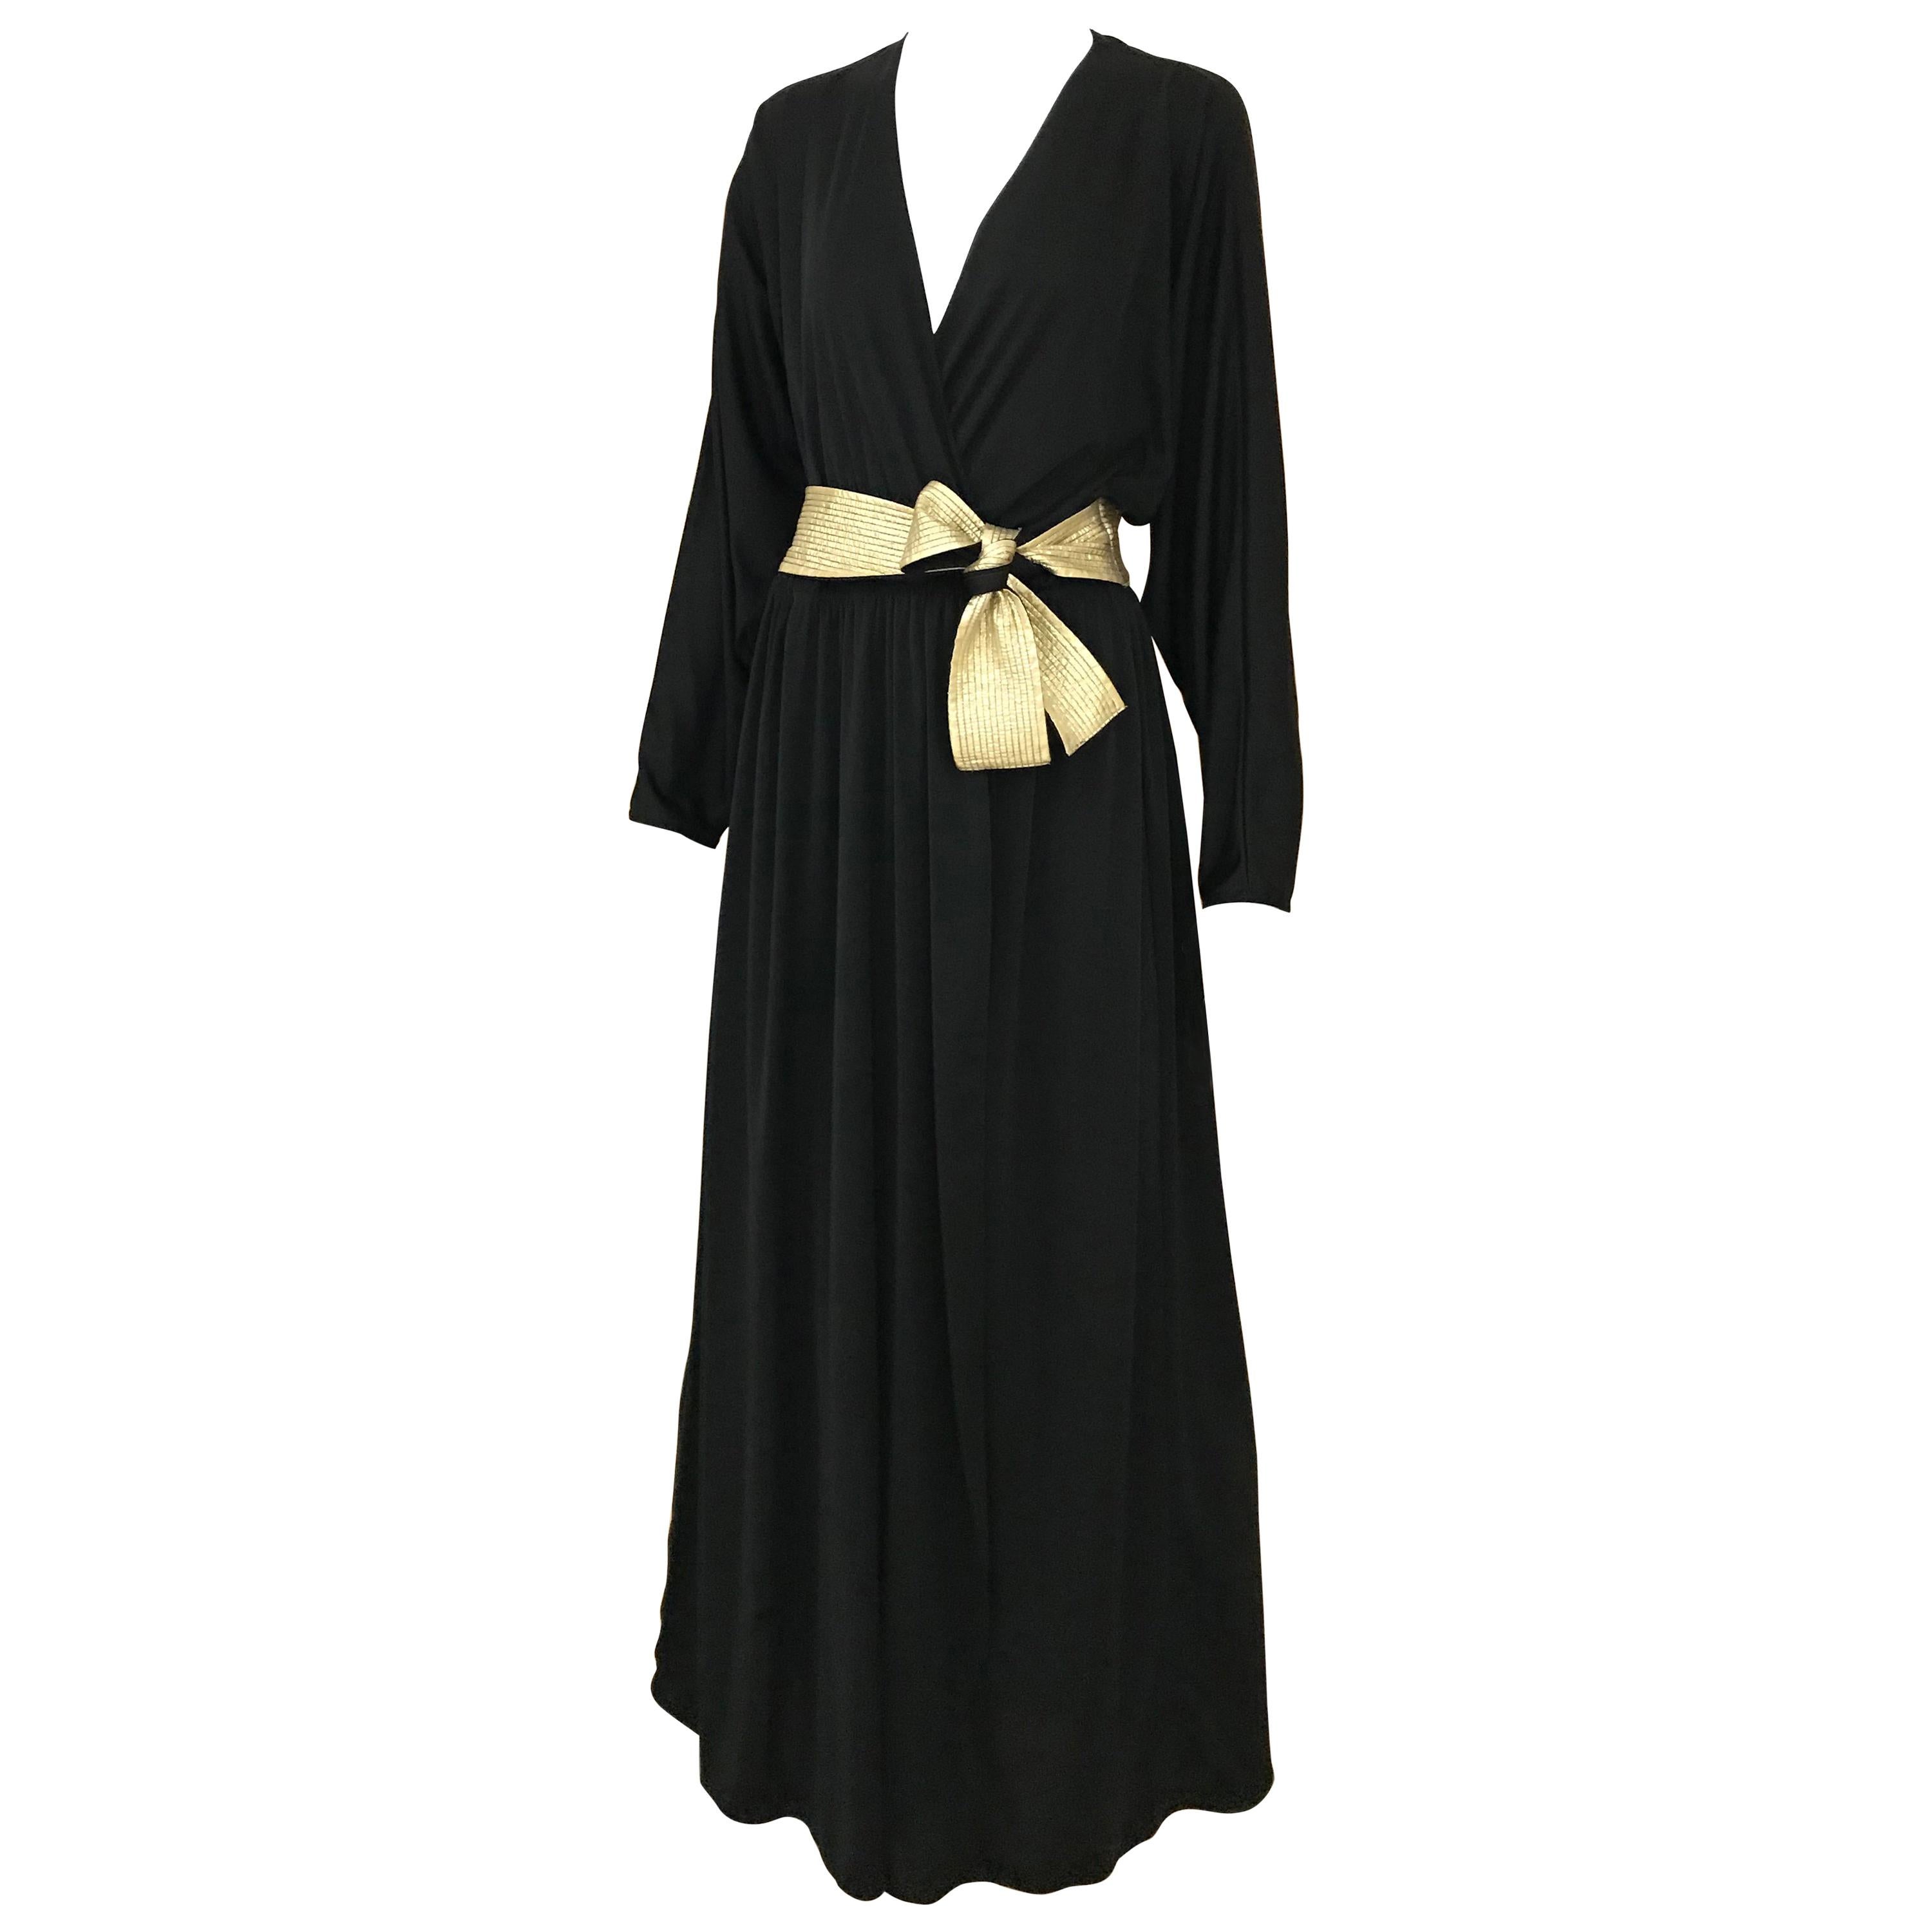 1970s Bill Tice Black Jersey V Neck Dress with Gold Sash